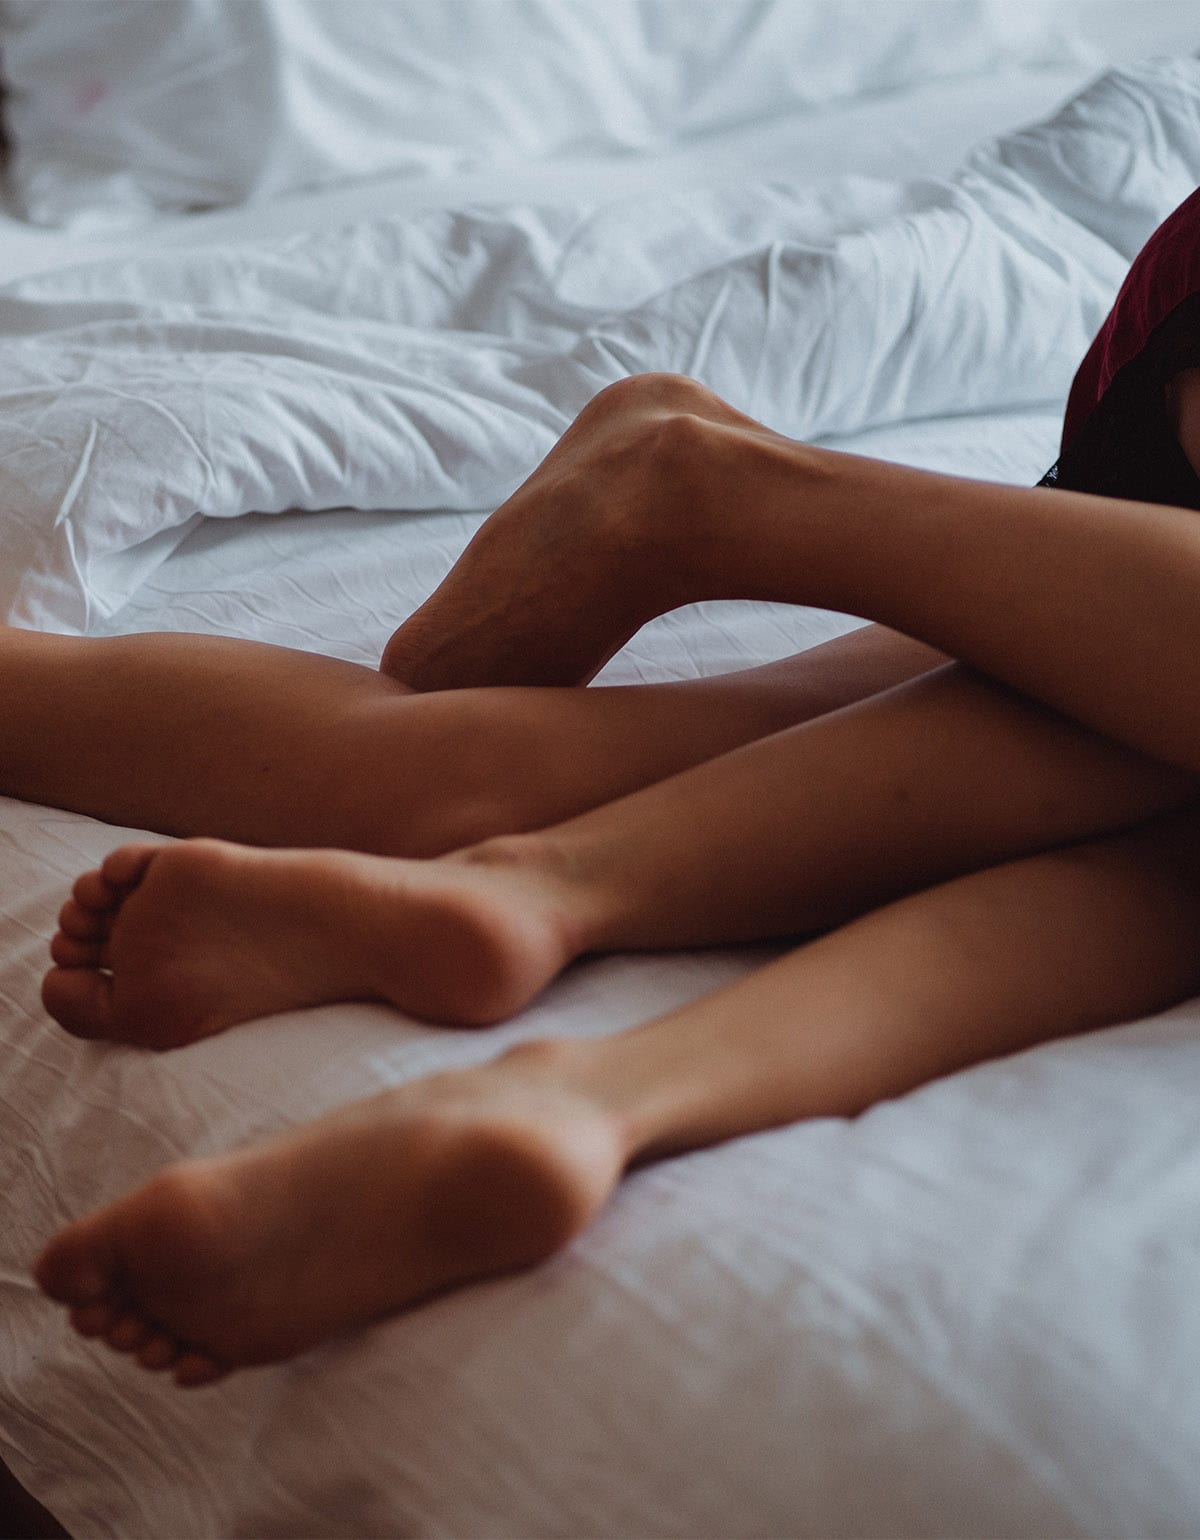 Is bleeding after sex normal?